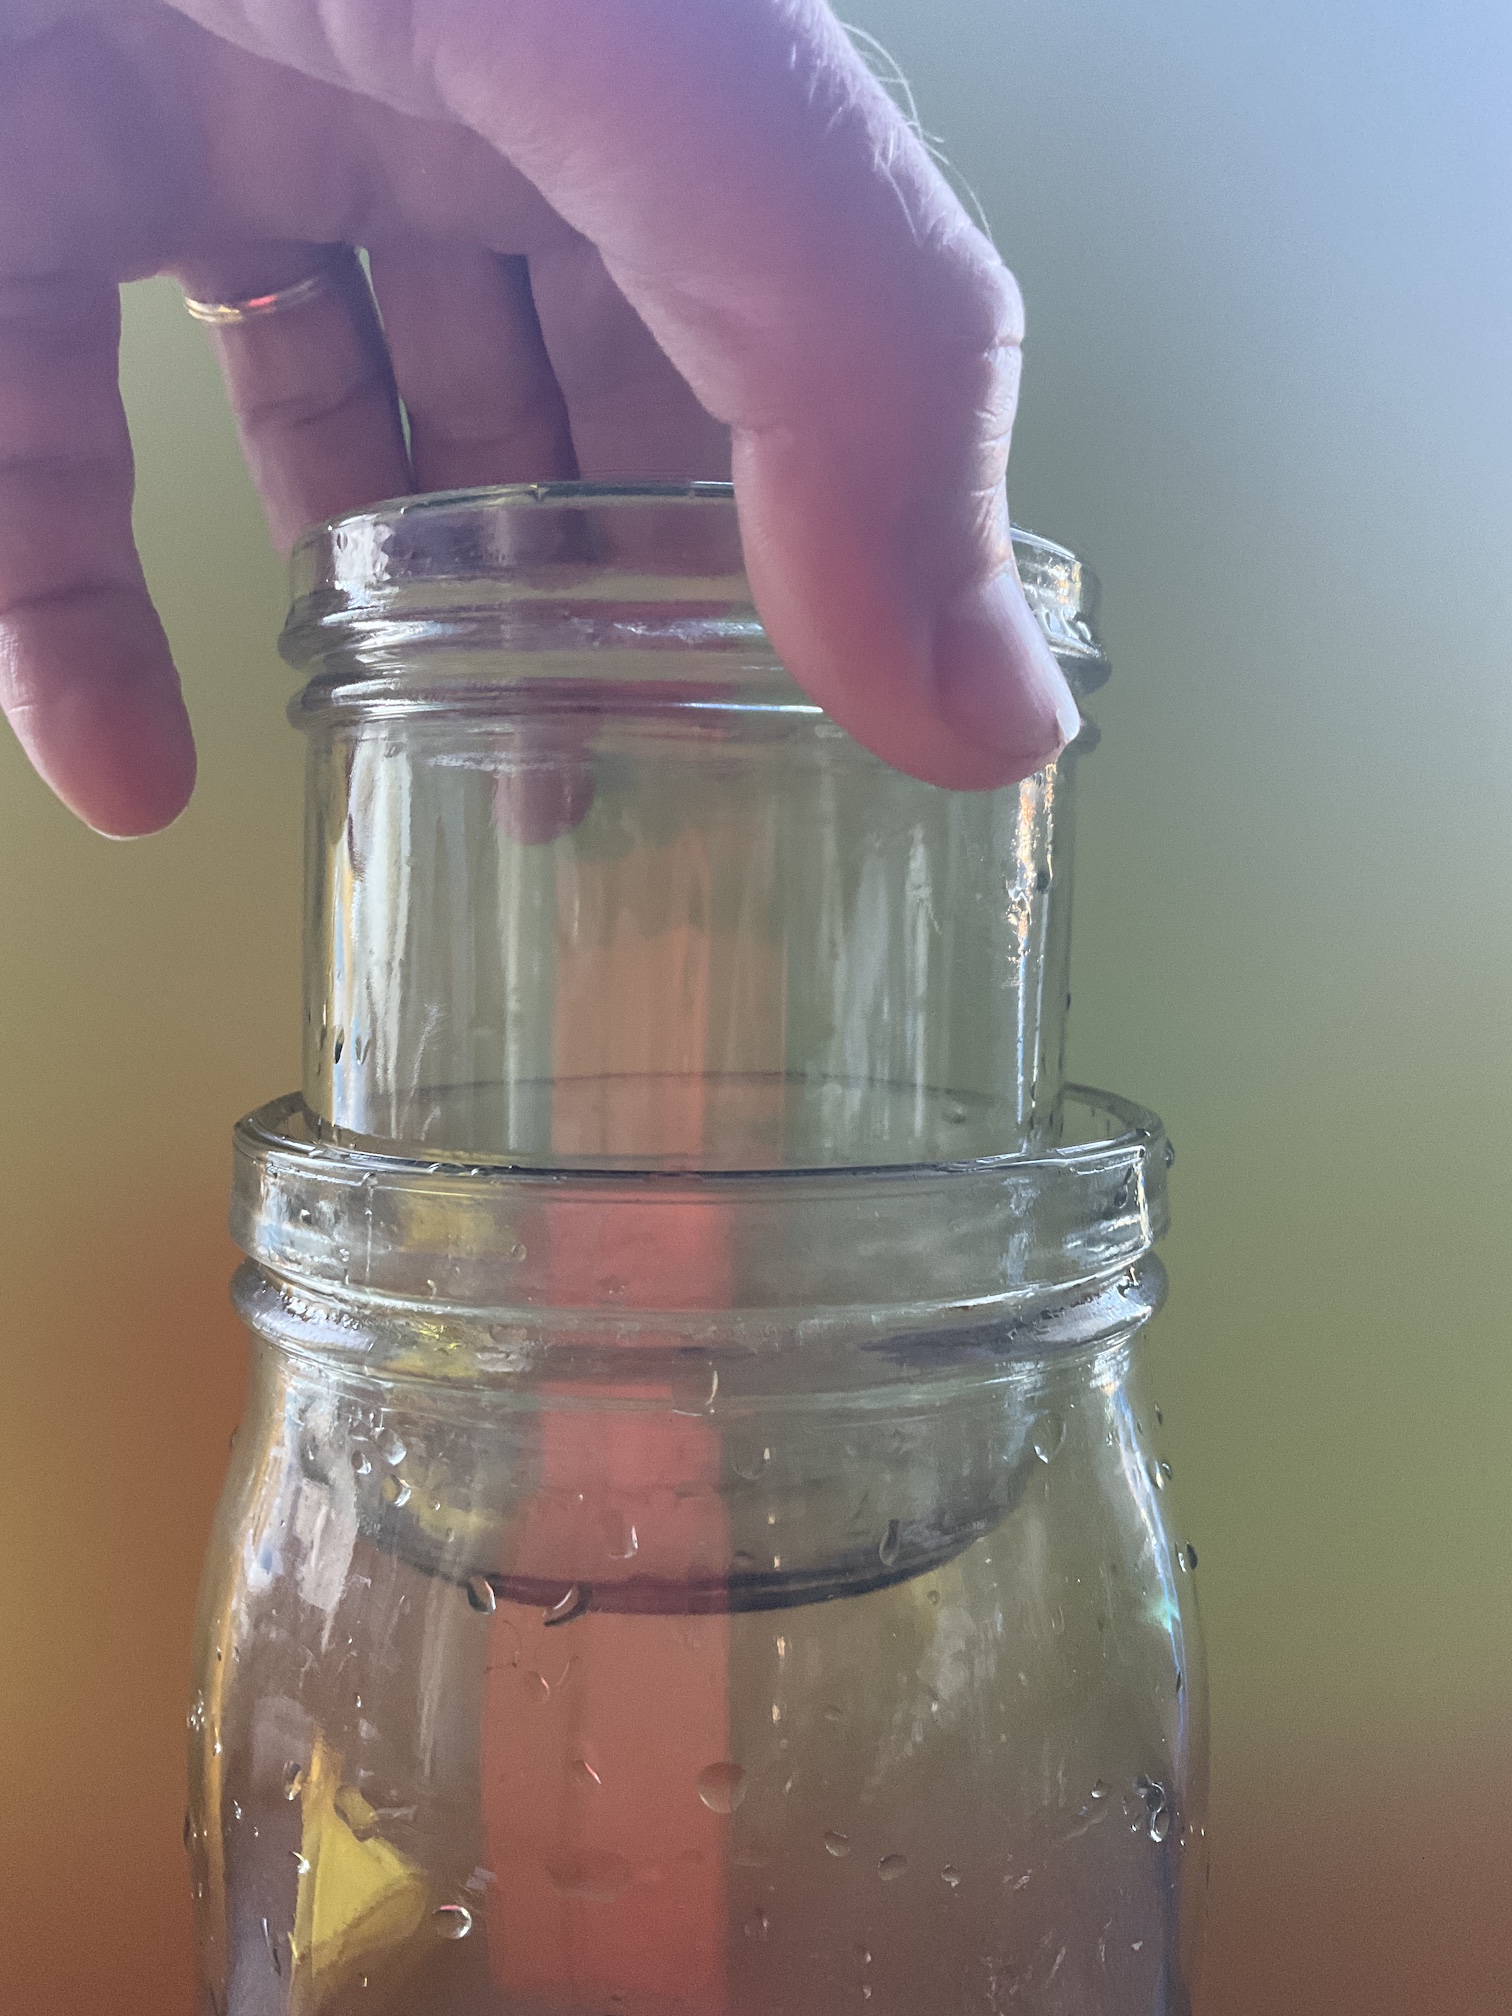 A hand holding a jar inside a jar